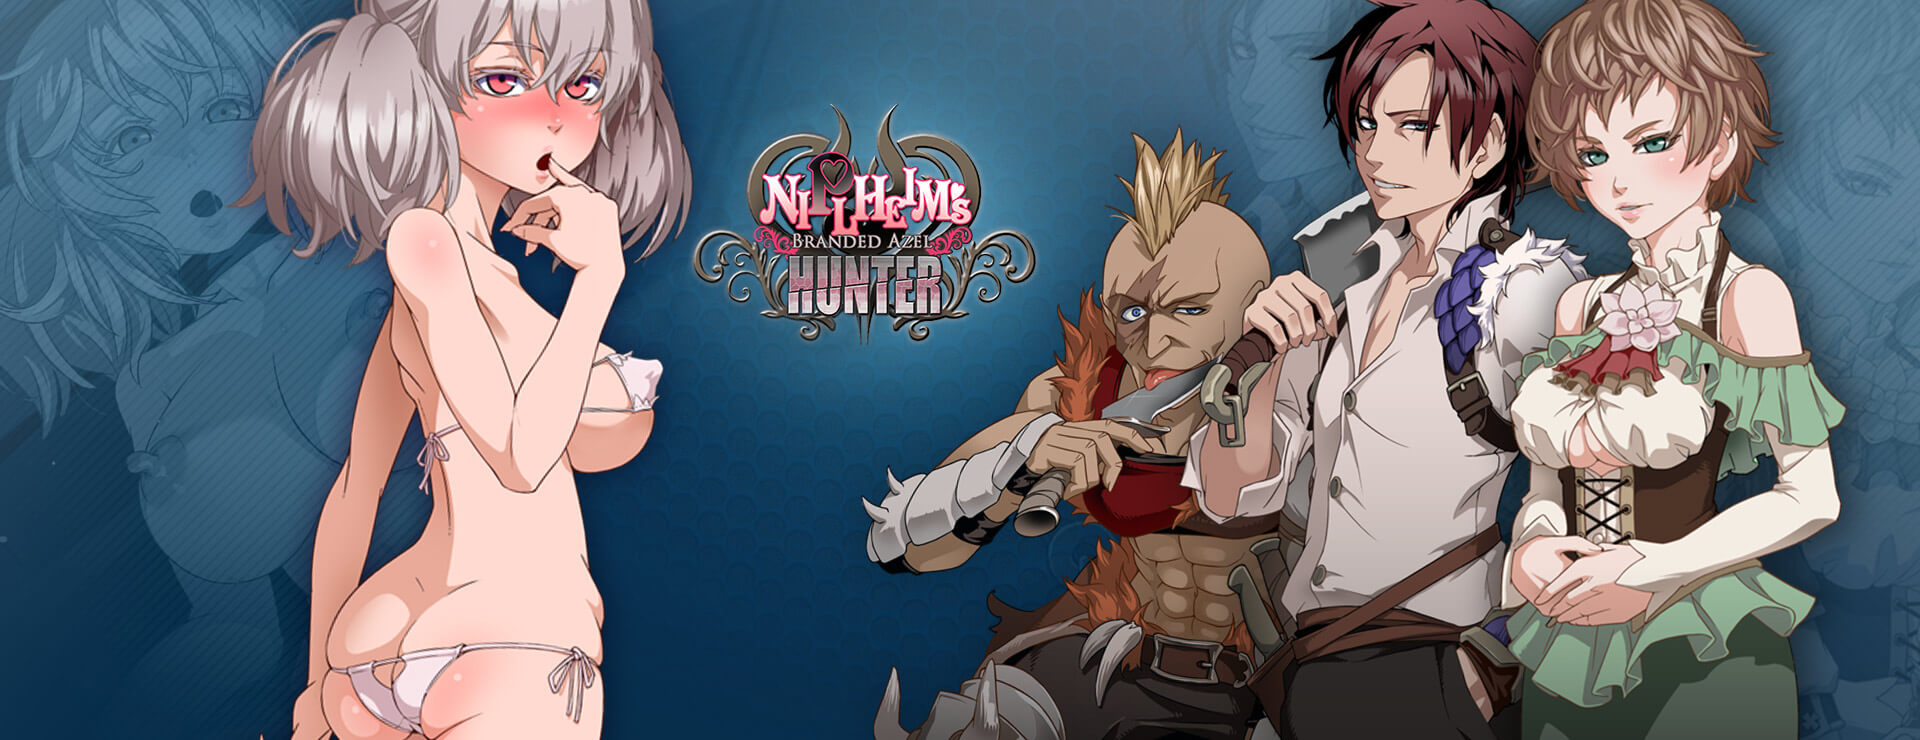 Niplheim's Hunter - Branded Azel thumbnail